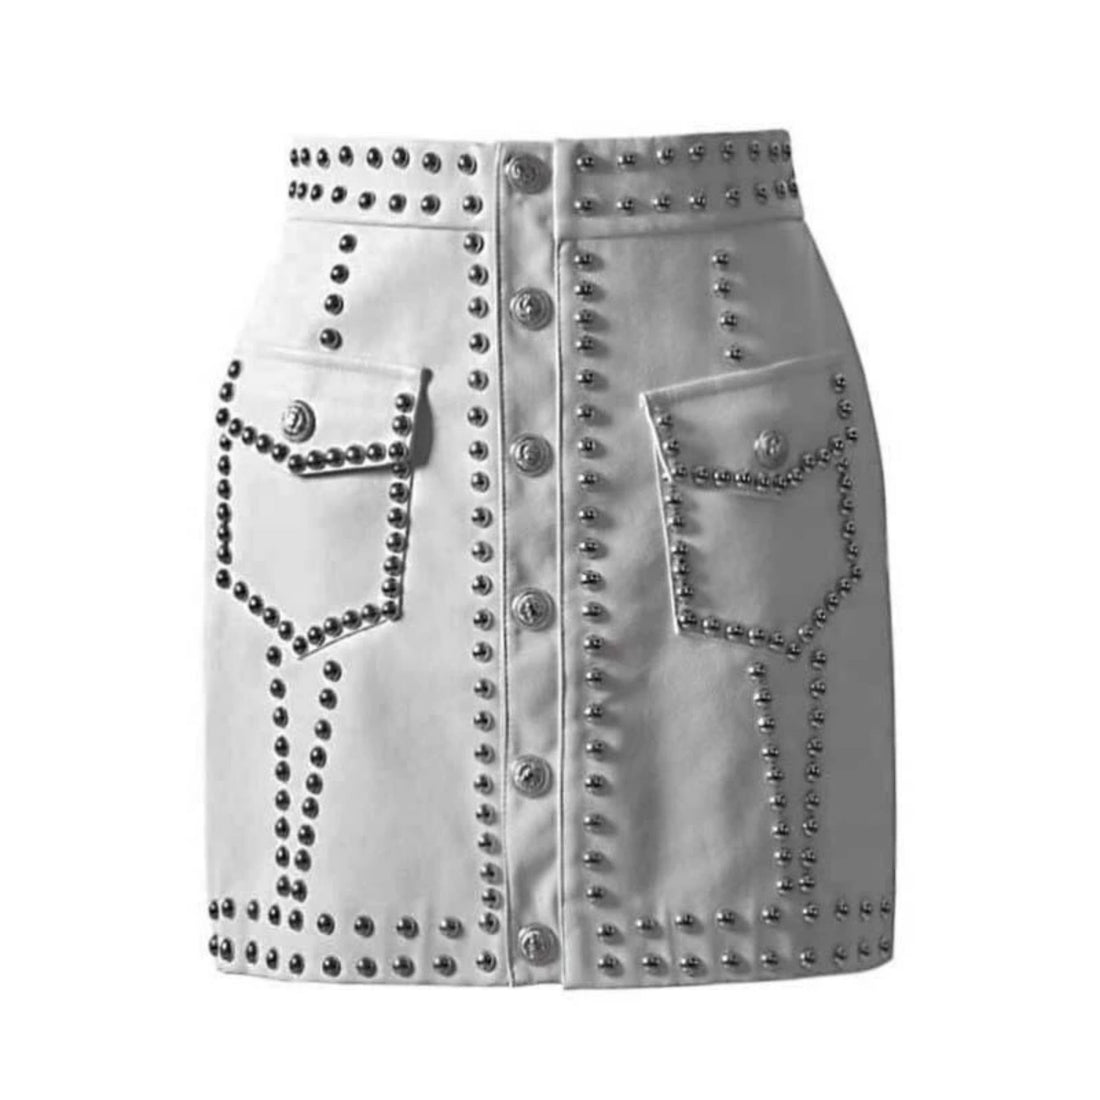 Women's Spring PU Leather High-Waist Mini Skirt